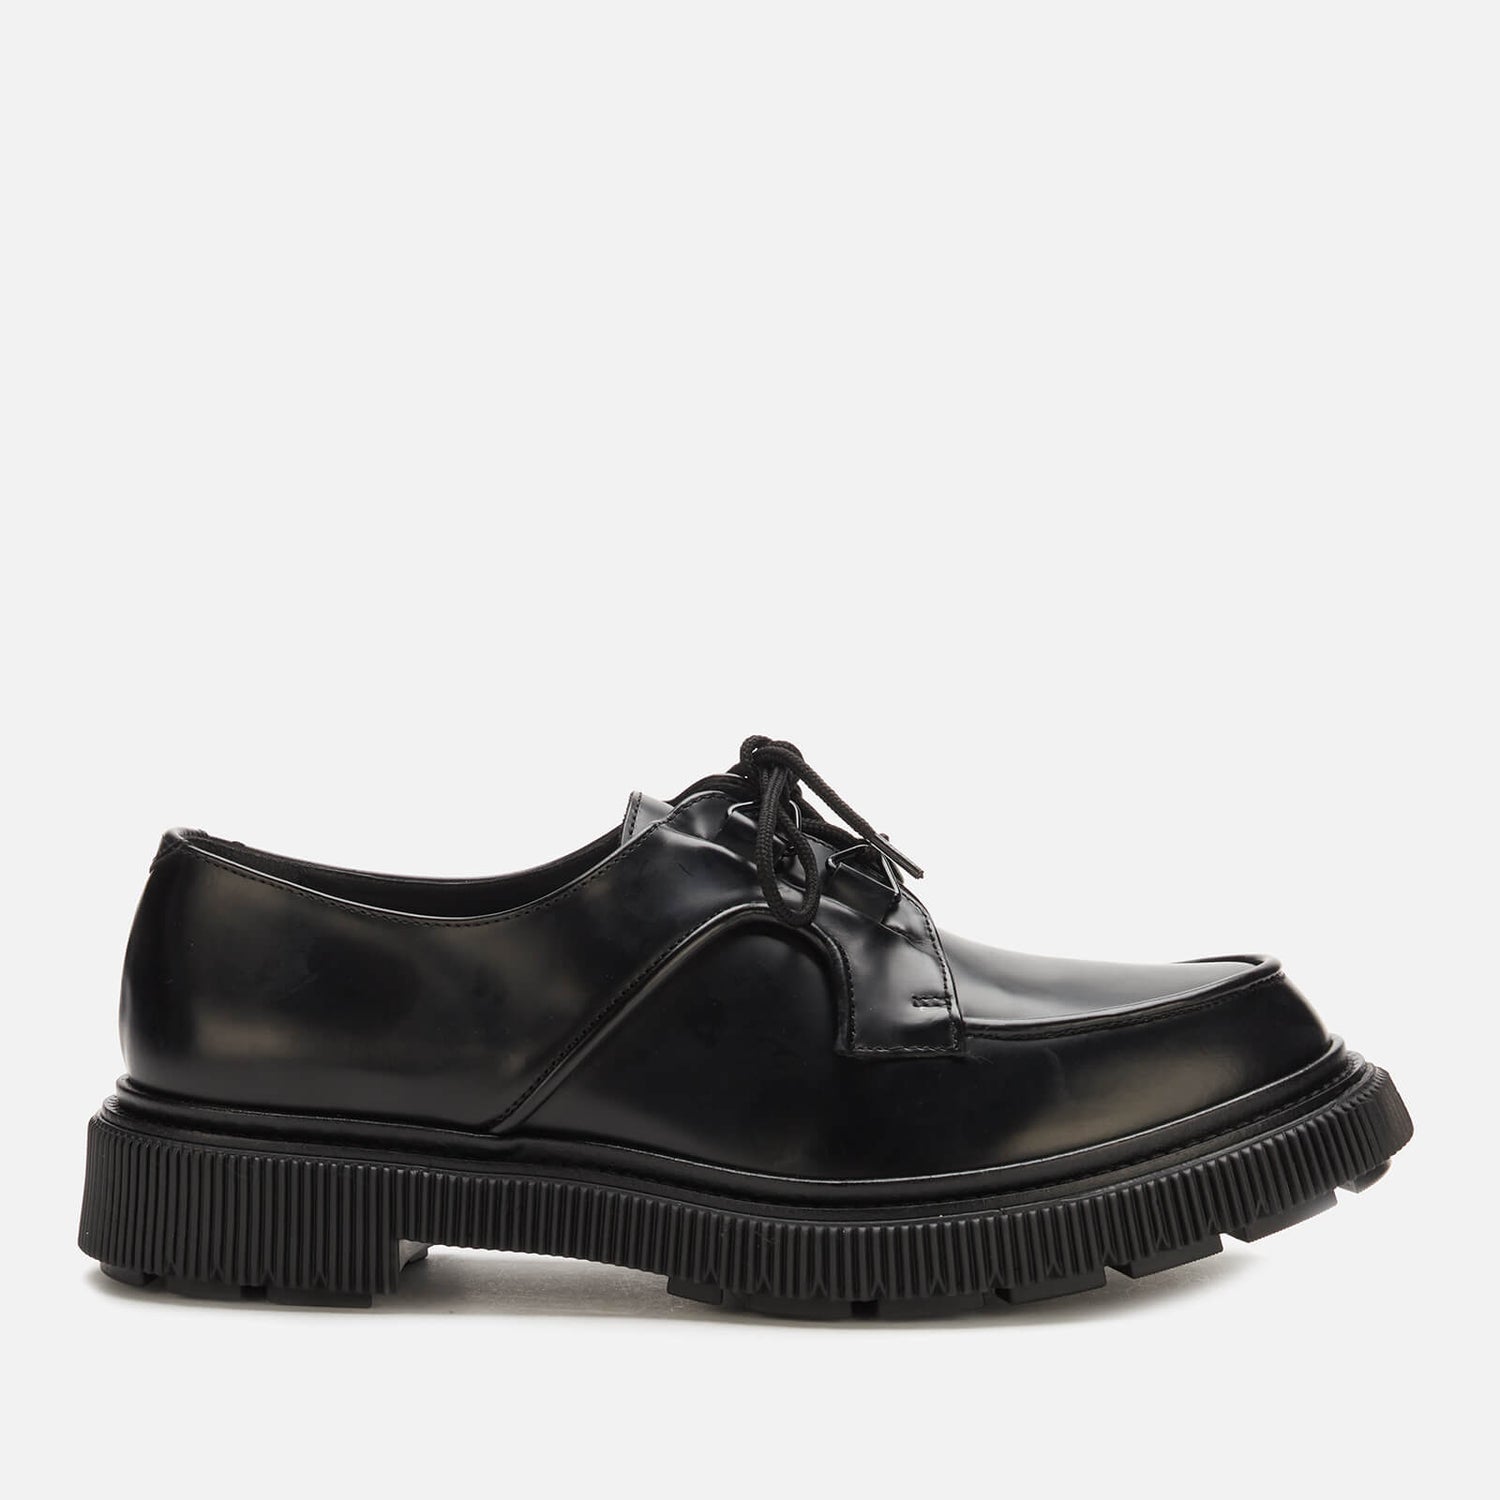 Adieu Men's Type 175 Leather Derby Shoes - Black - UK 8